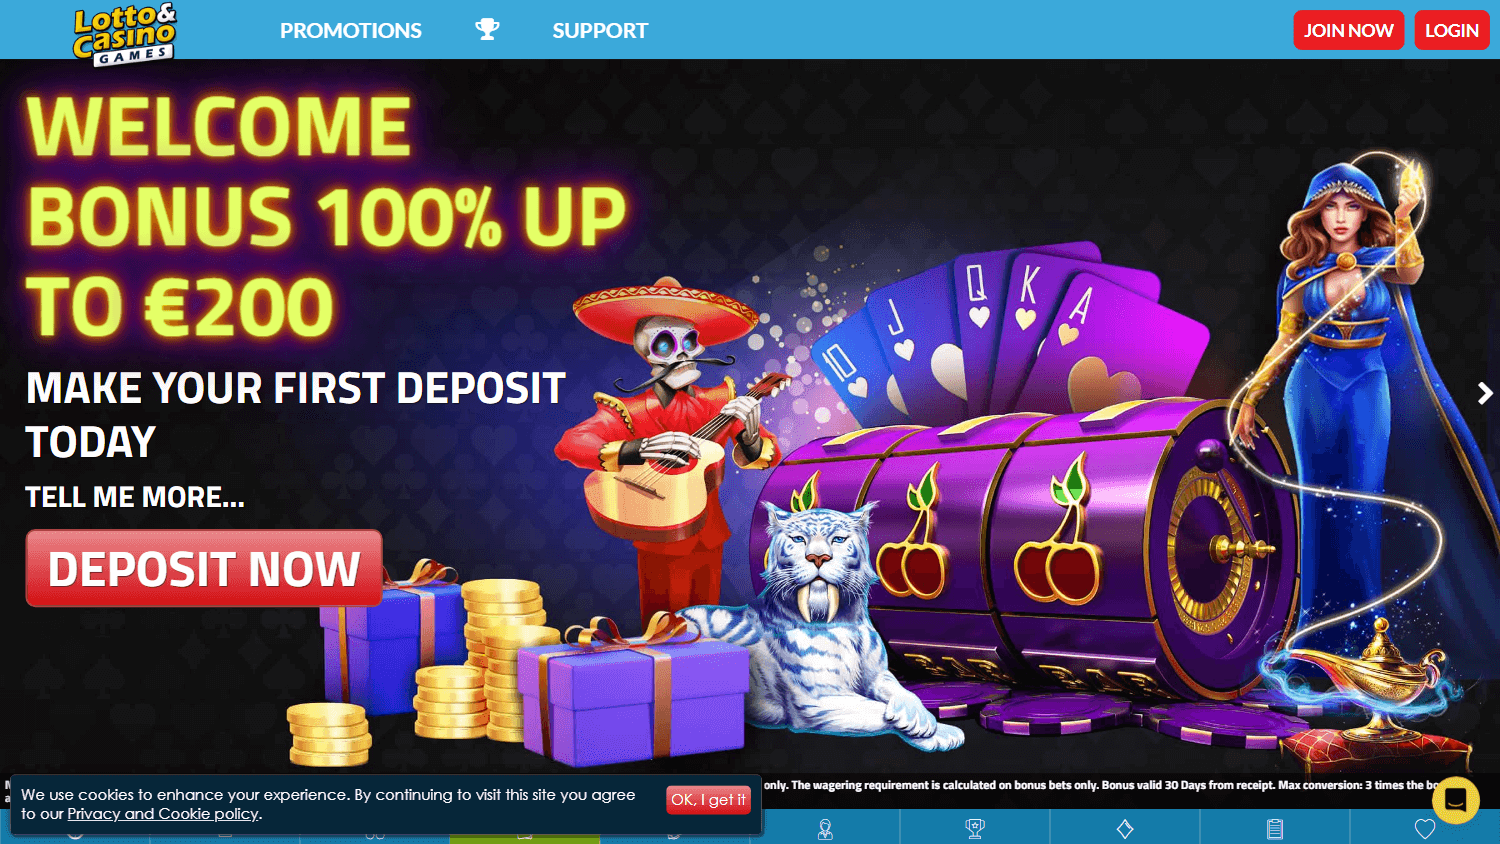 lotto_games_casino_promotions_desktop